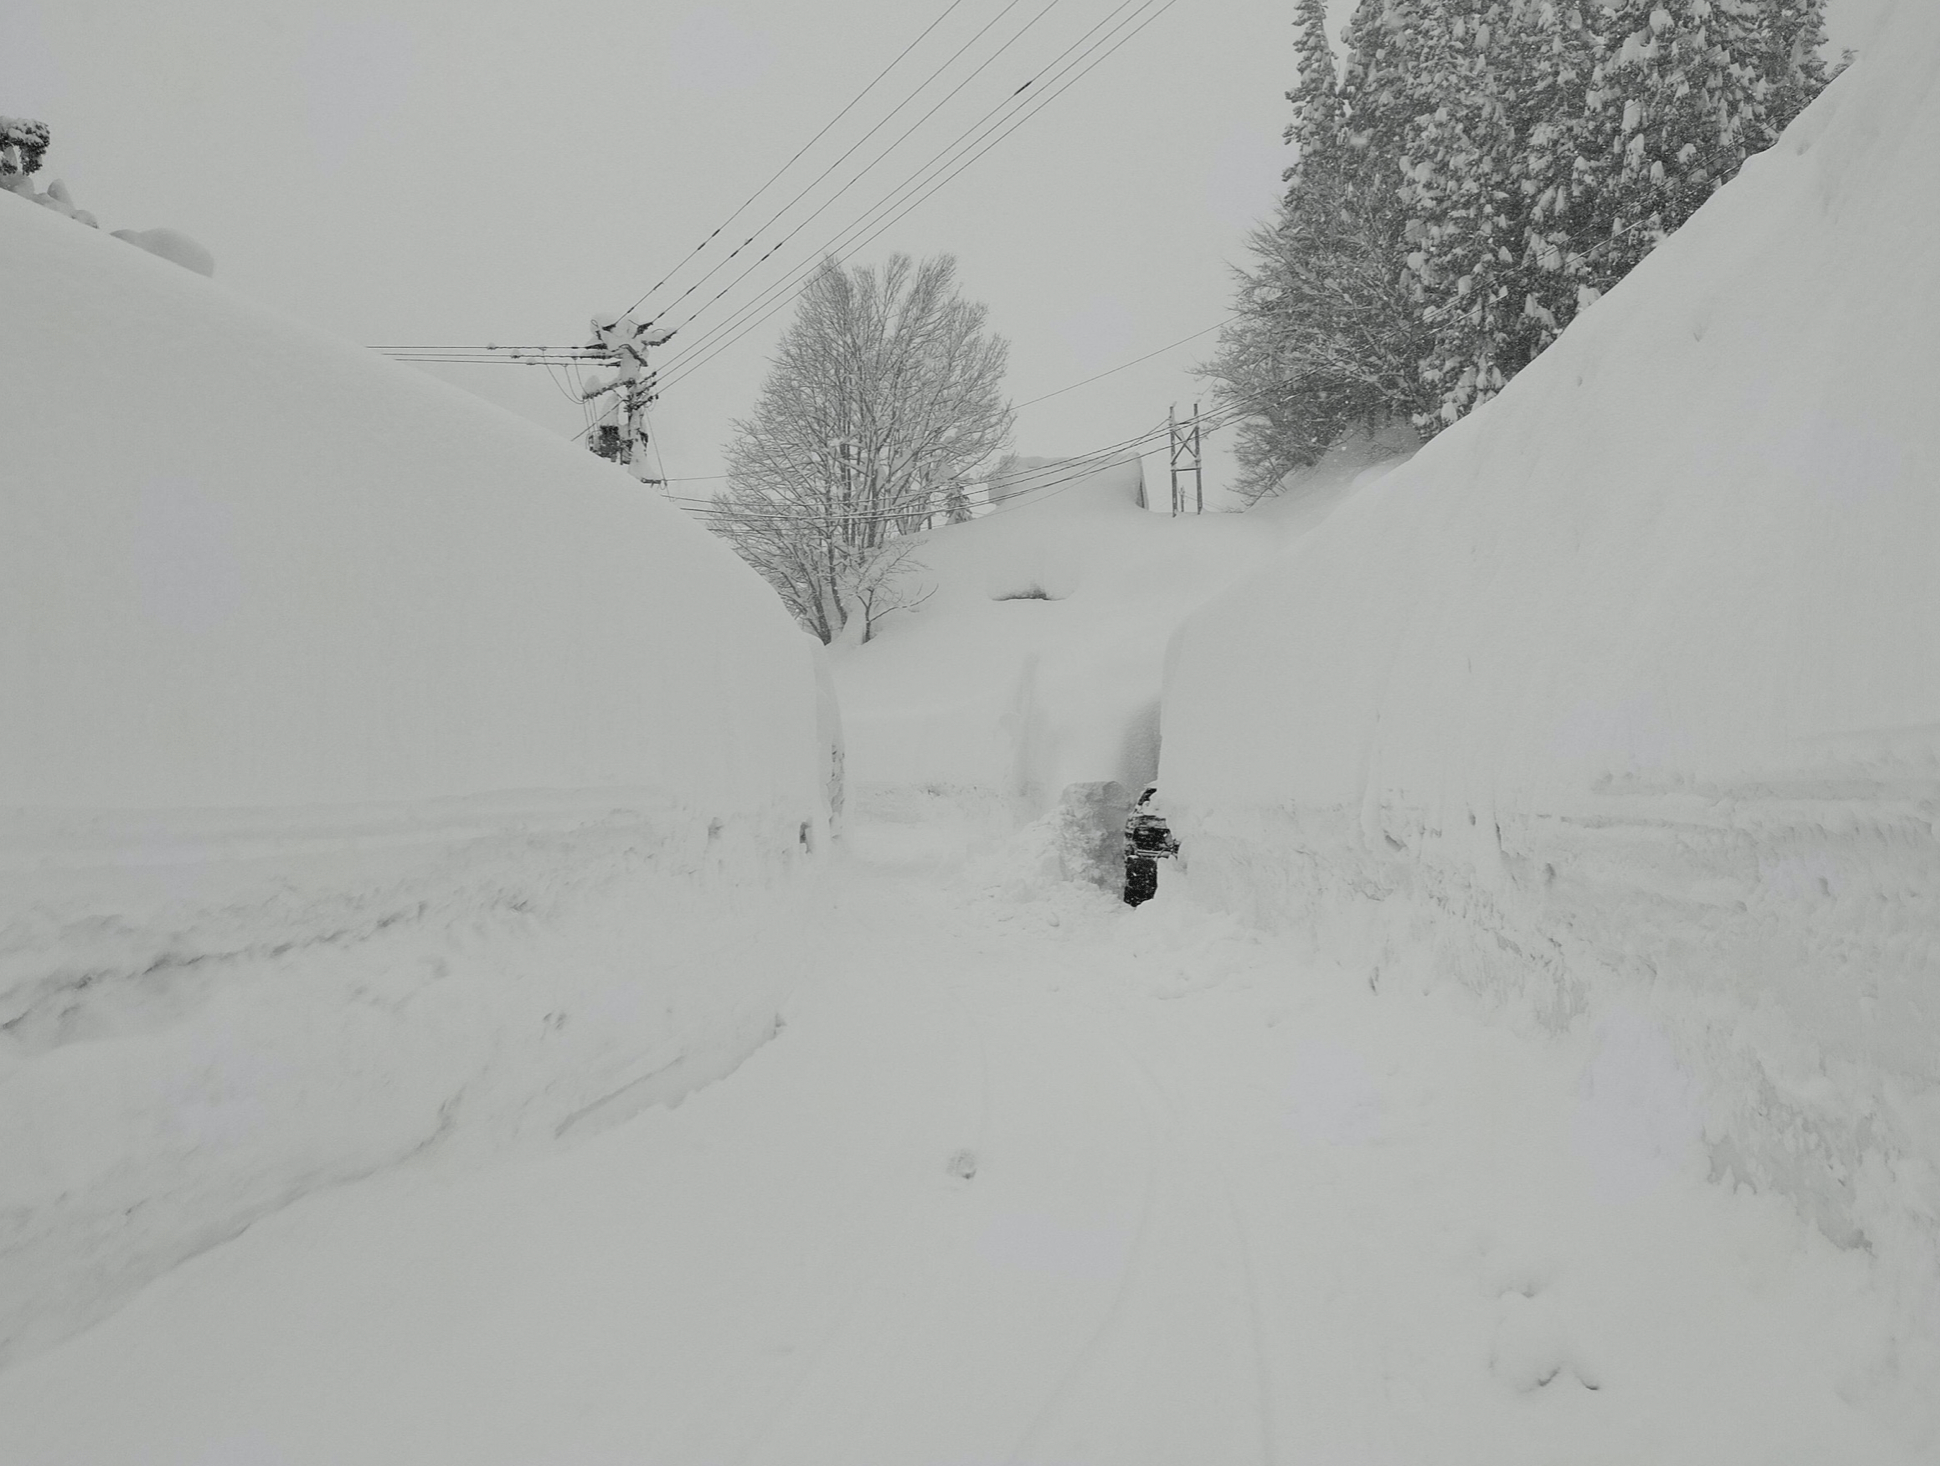 Snow in Japan